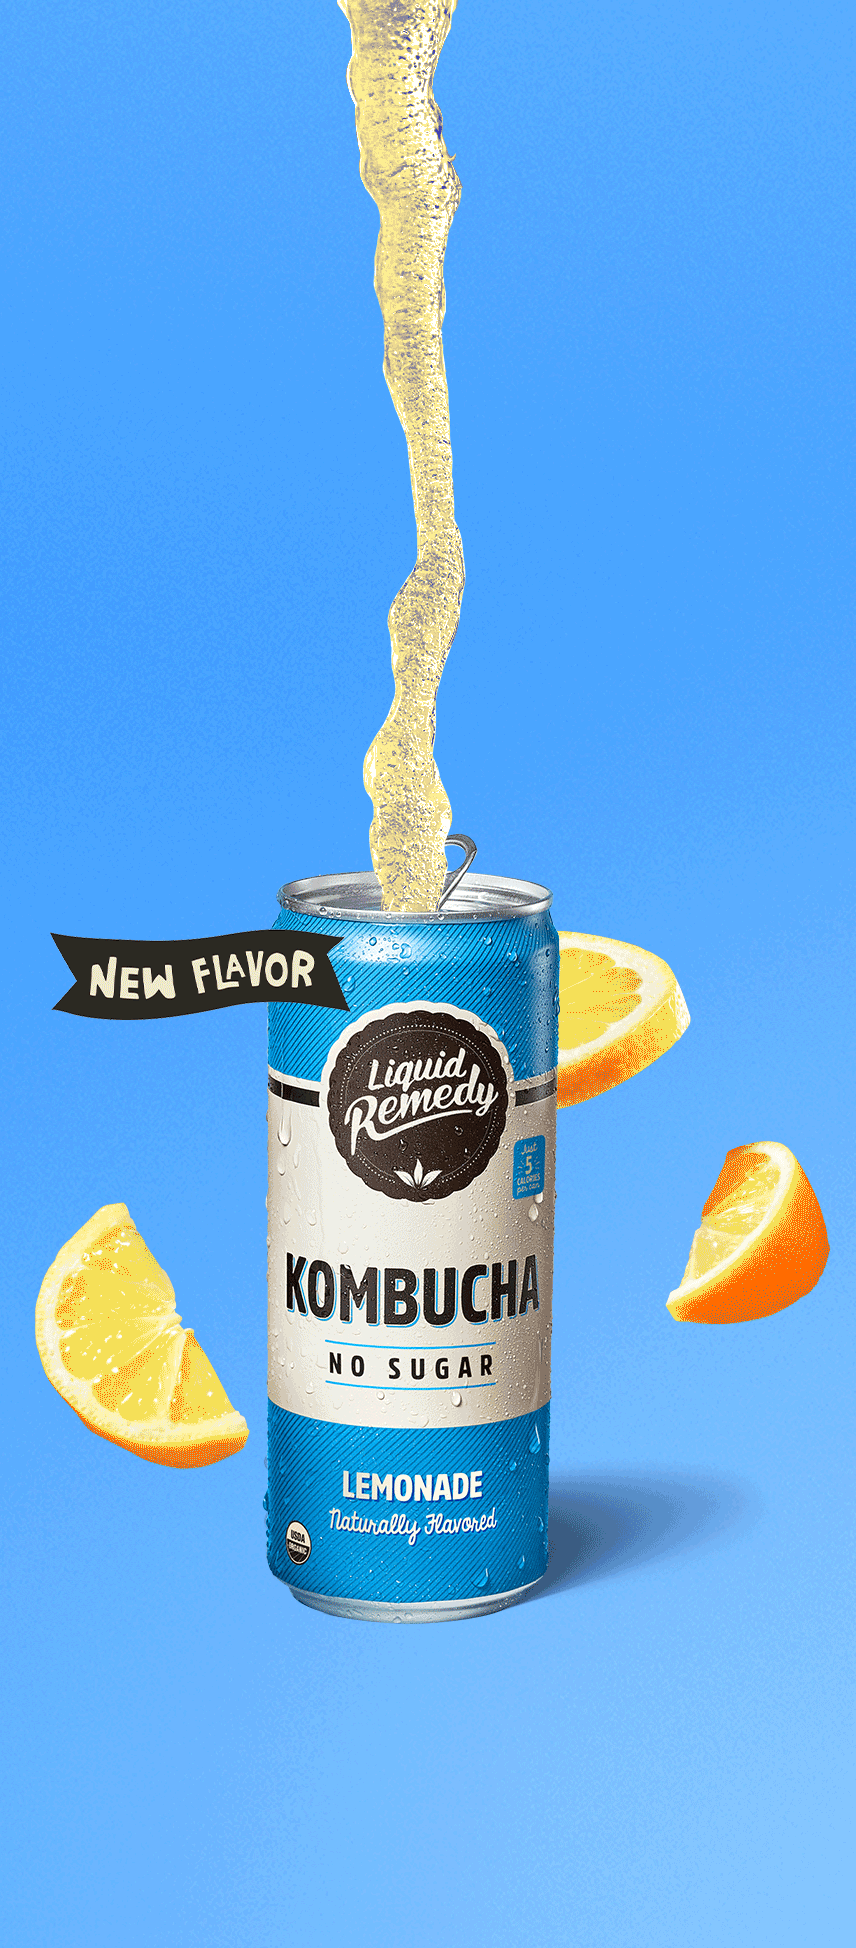 Liquid Remedy Lemonade. New Flavor